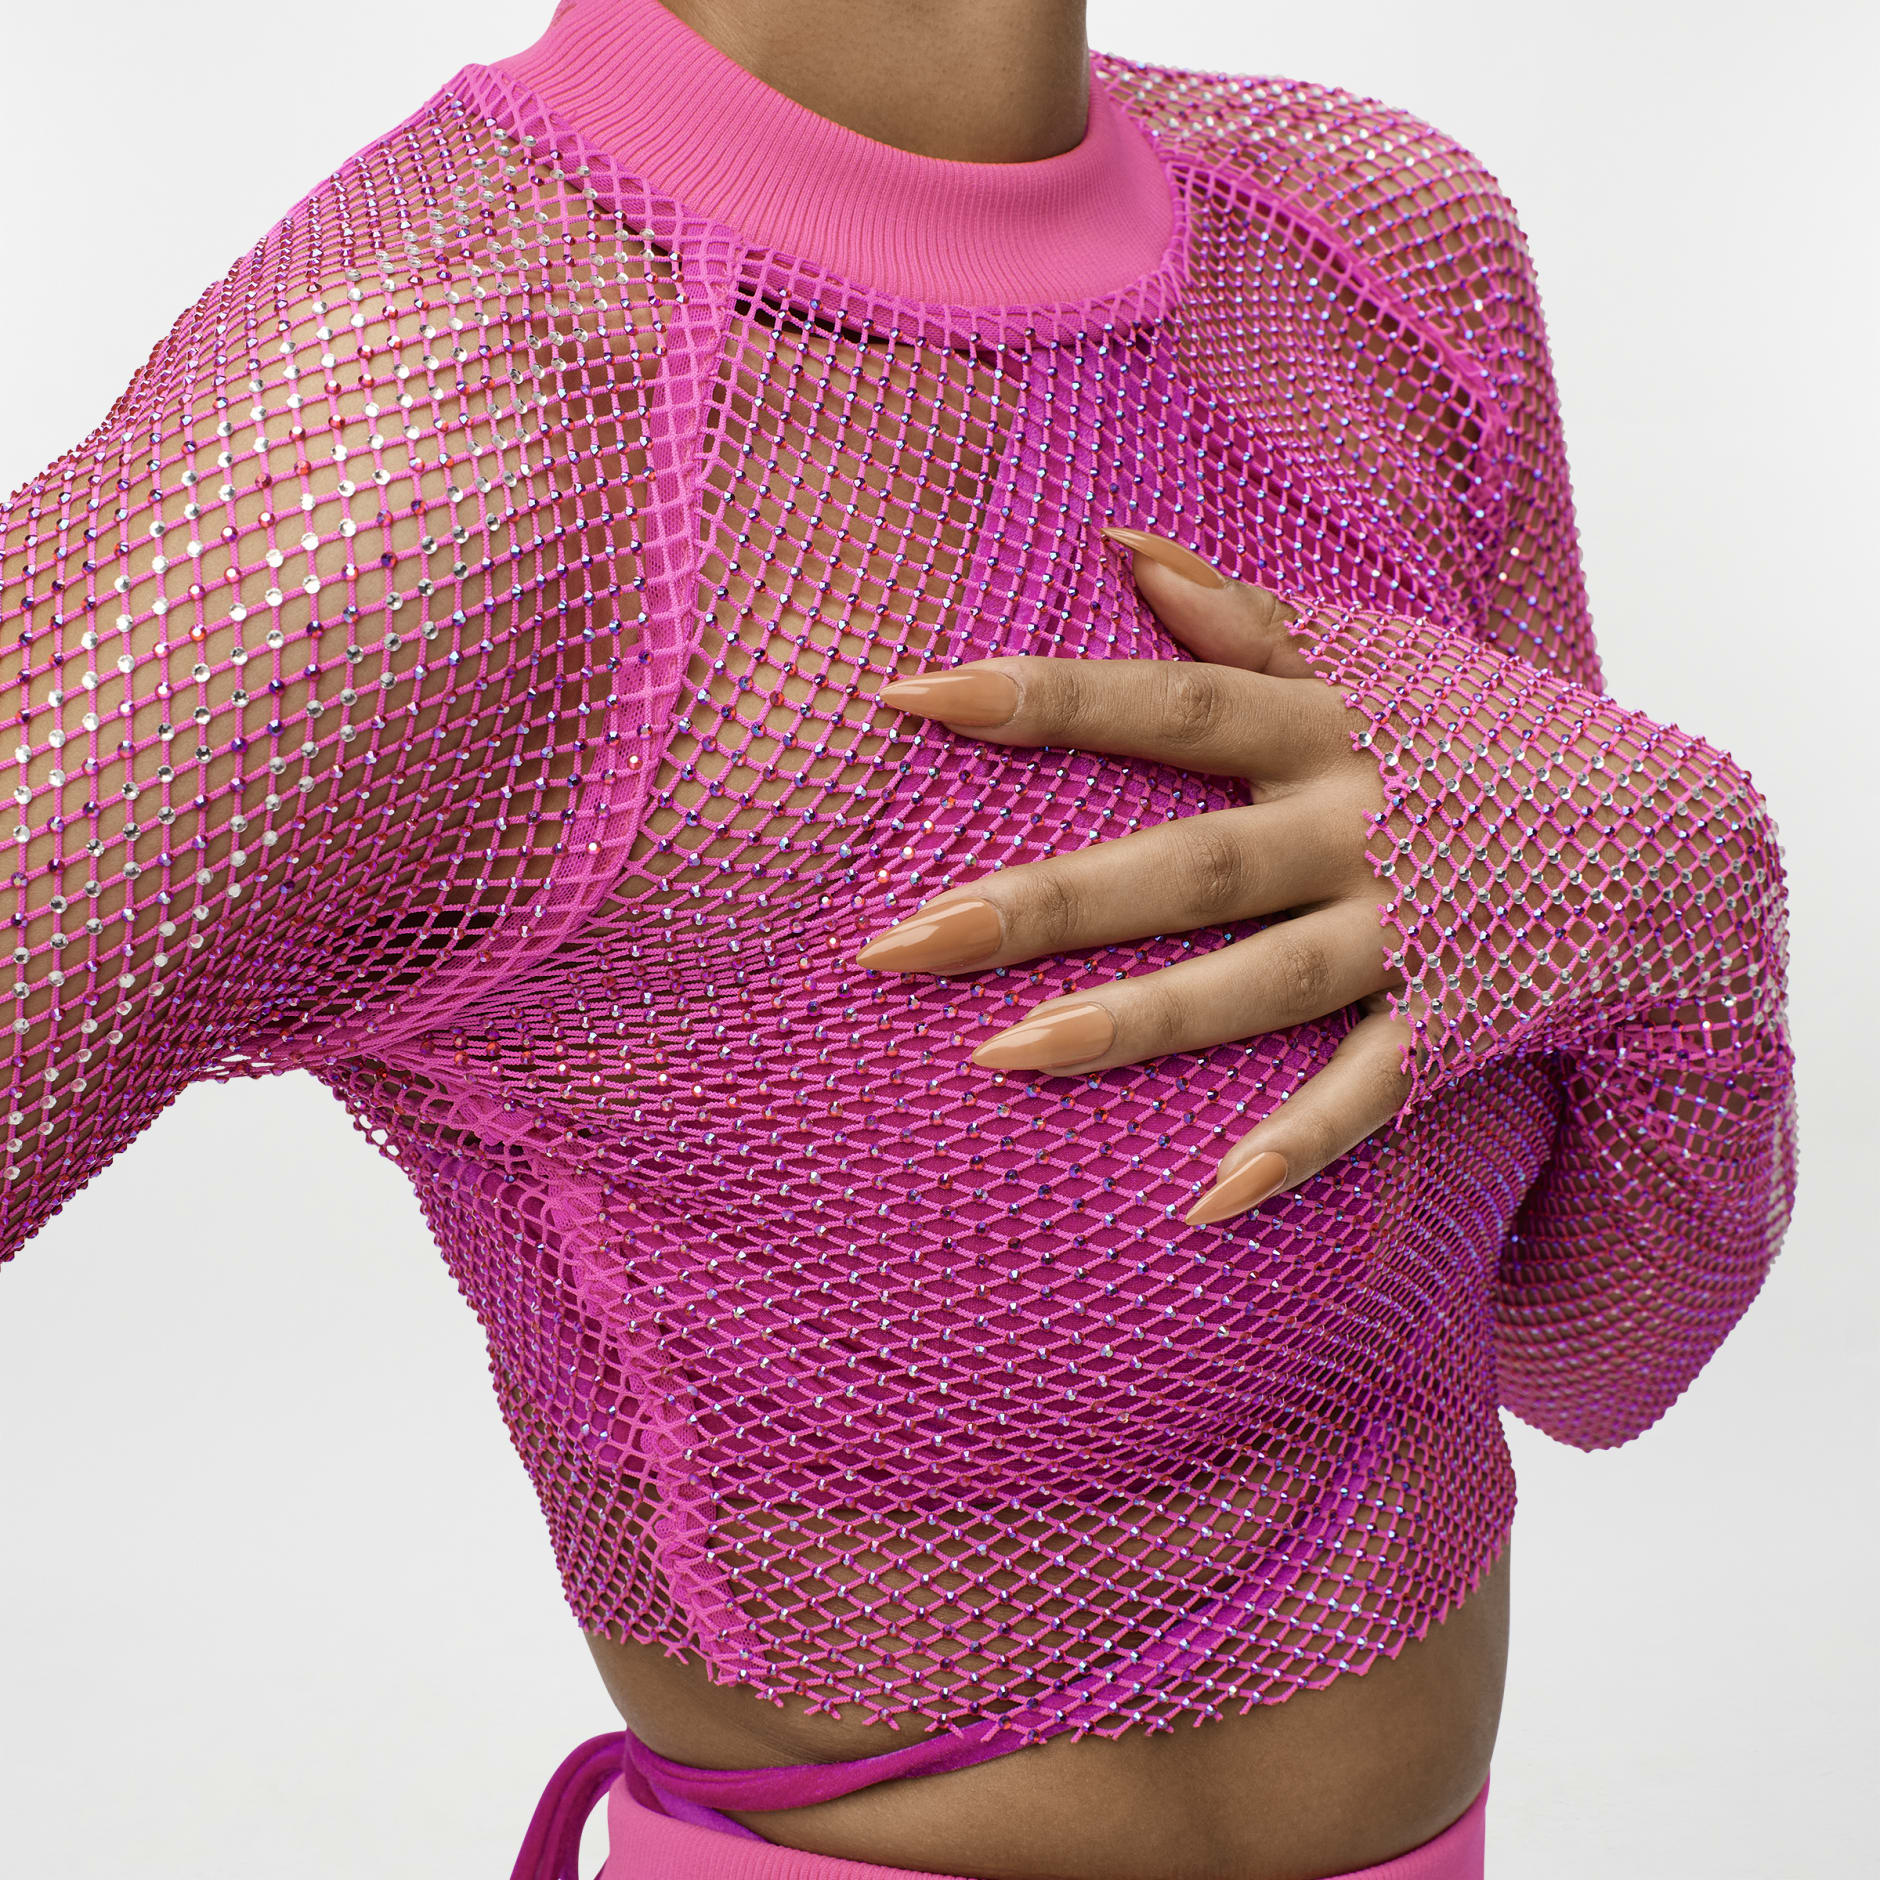 New Sexy Long Sleeve Fishnet Shirt Top Bathing Suit Cover Up_Aqua in Dubai  - UAE